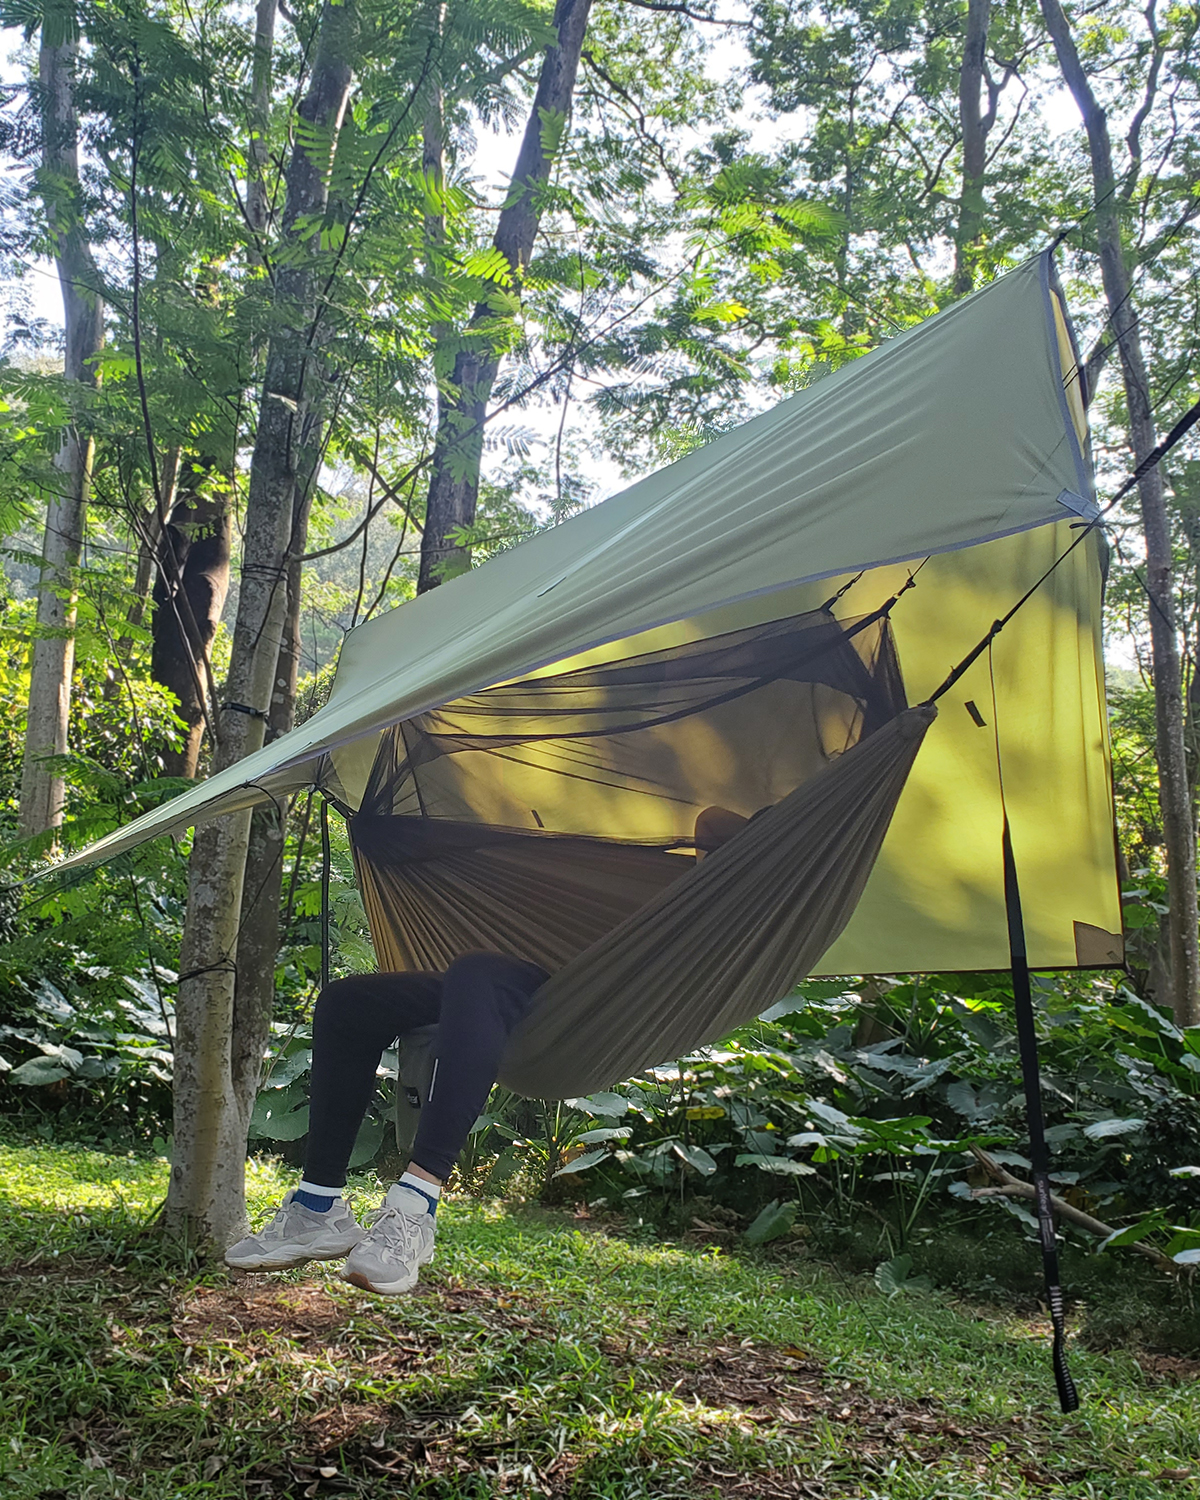 Sunyear Hammock Camping with Rain Fly Tarp and Net, Portable Camping  Hammock